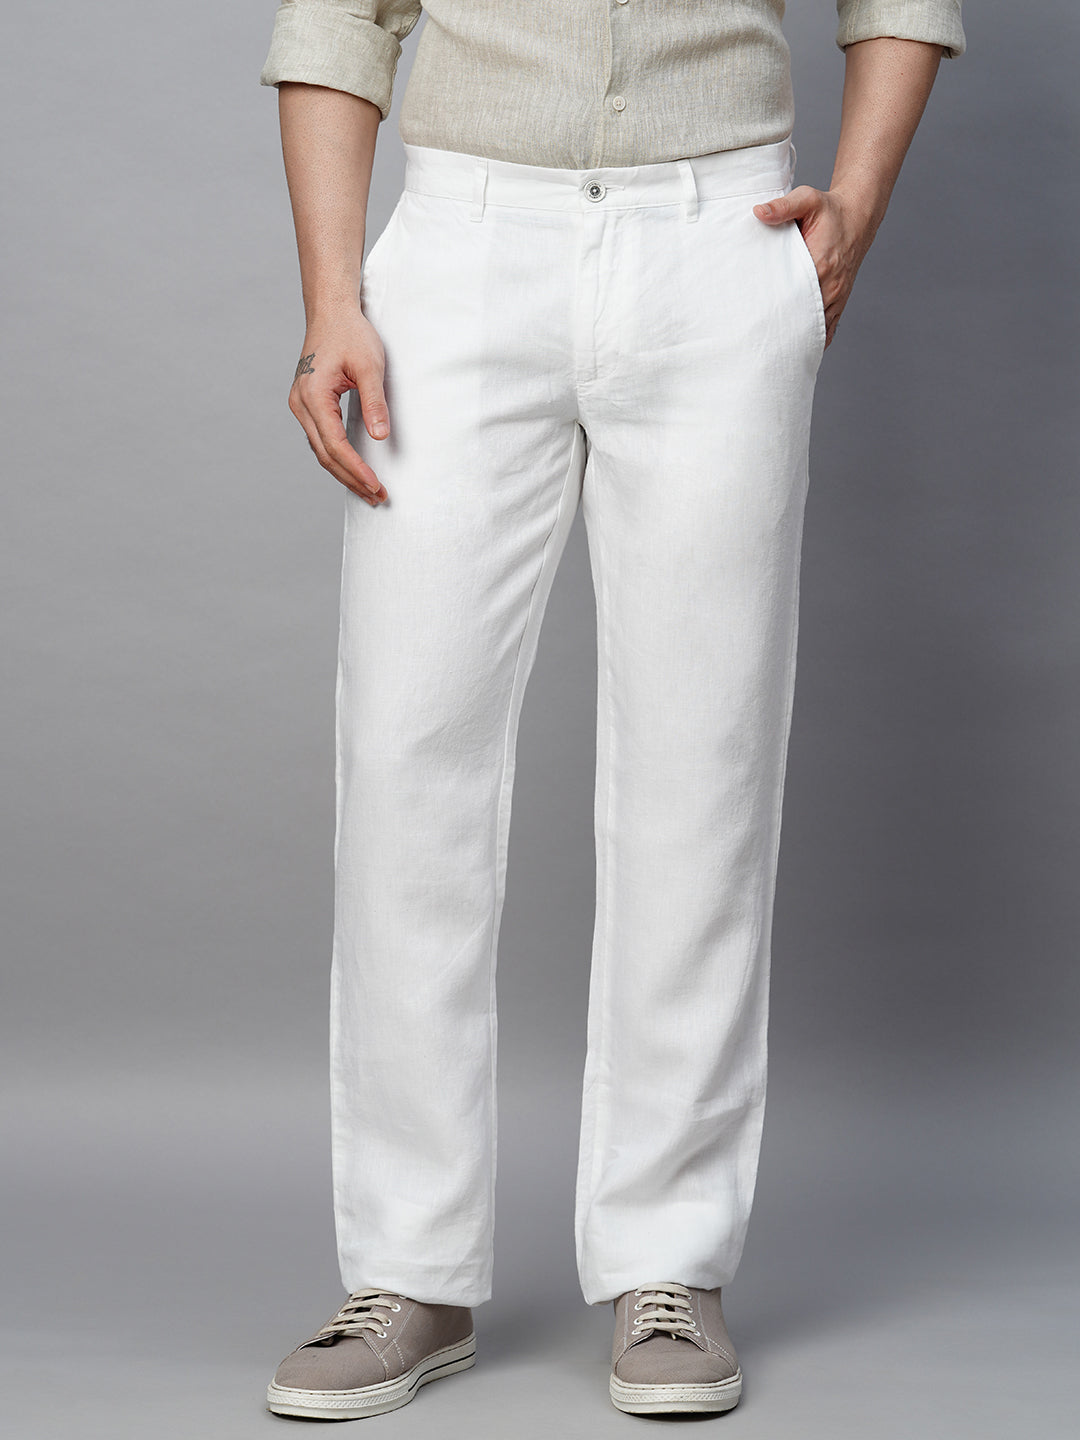 Cotton Pants | Cotton Pants for Men | White Cotton Pants Mens | Buy Cotton  Pants Online – Ramraj Cotton – Tagged 